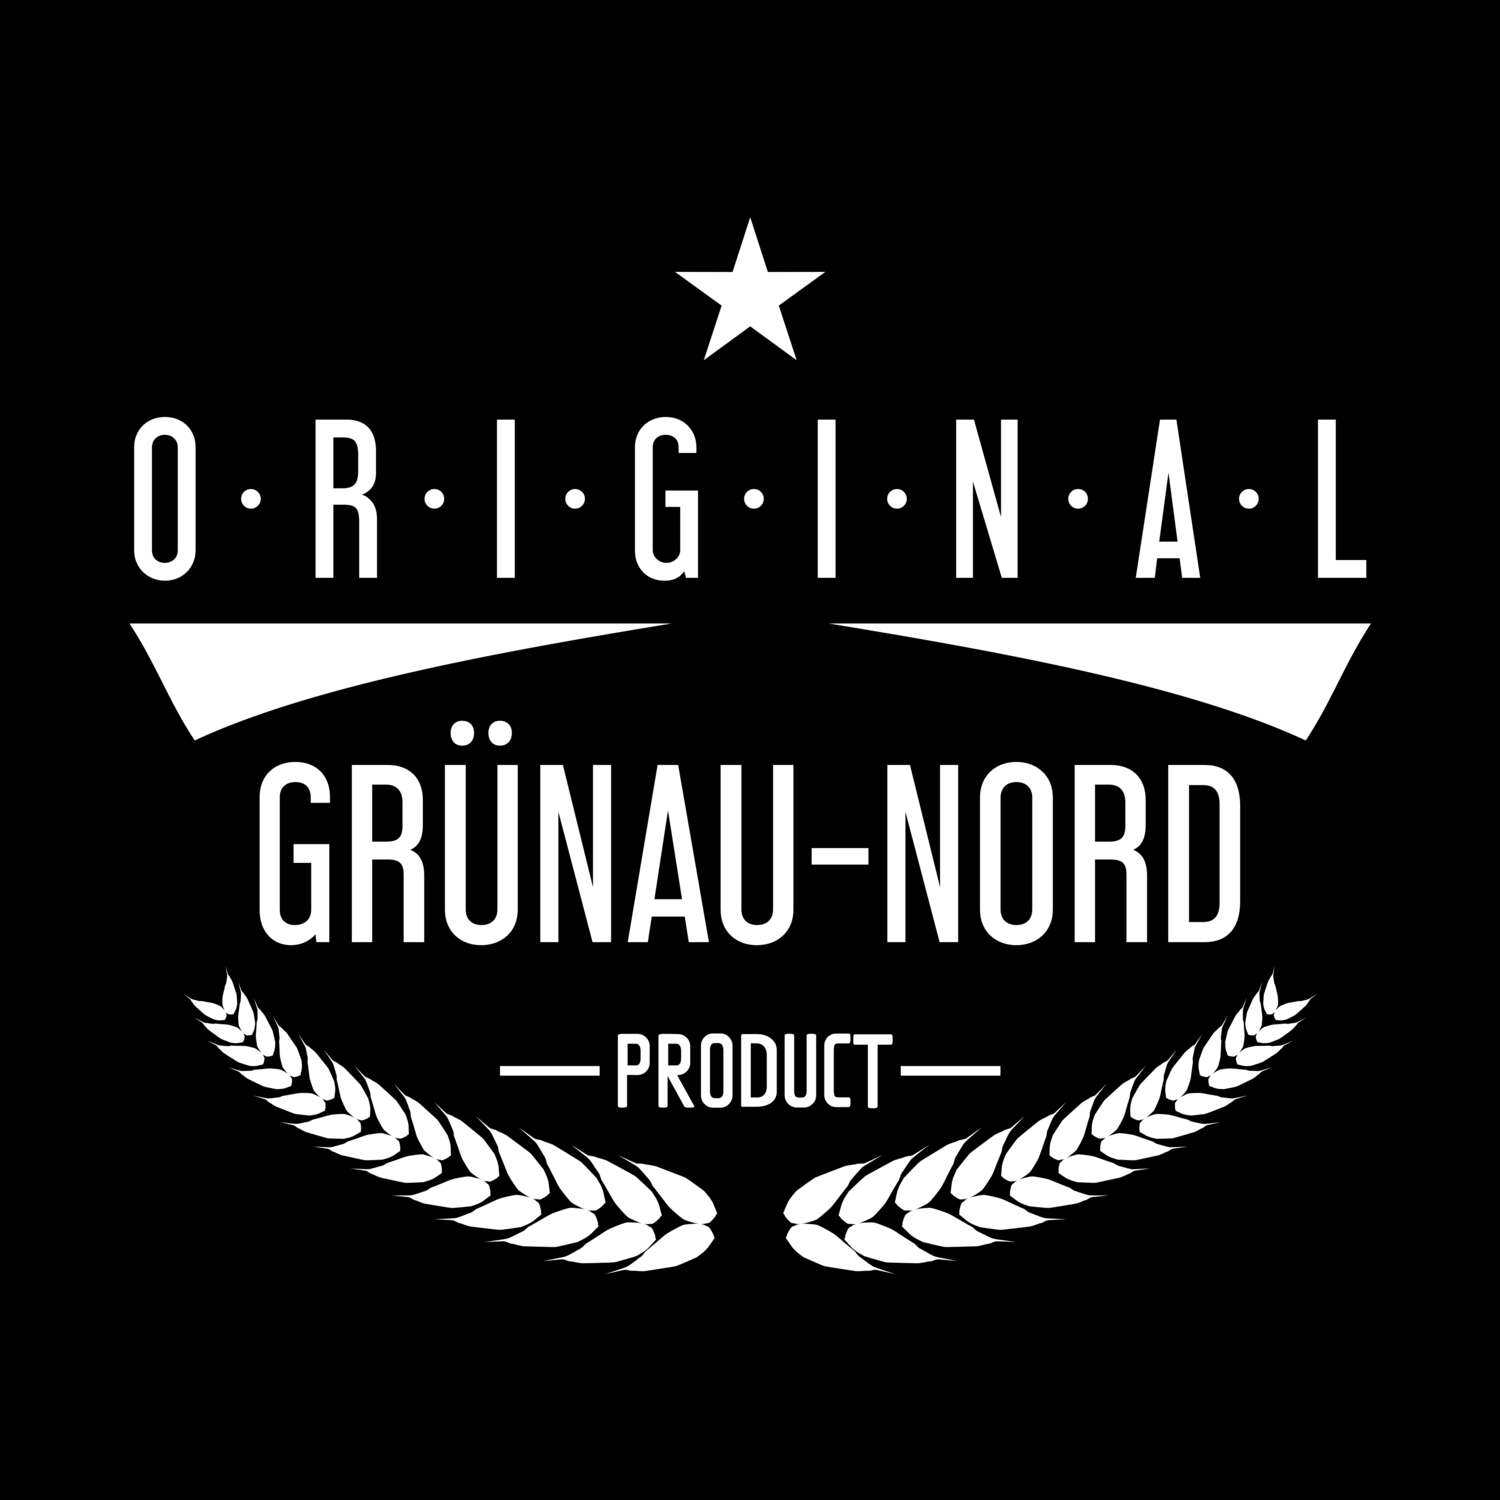 Grünau-Nord T-Shirt »Original Product«